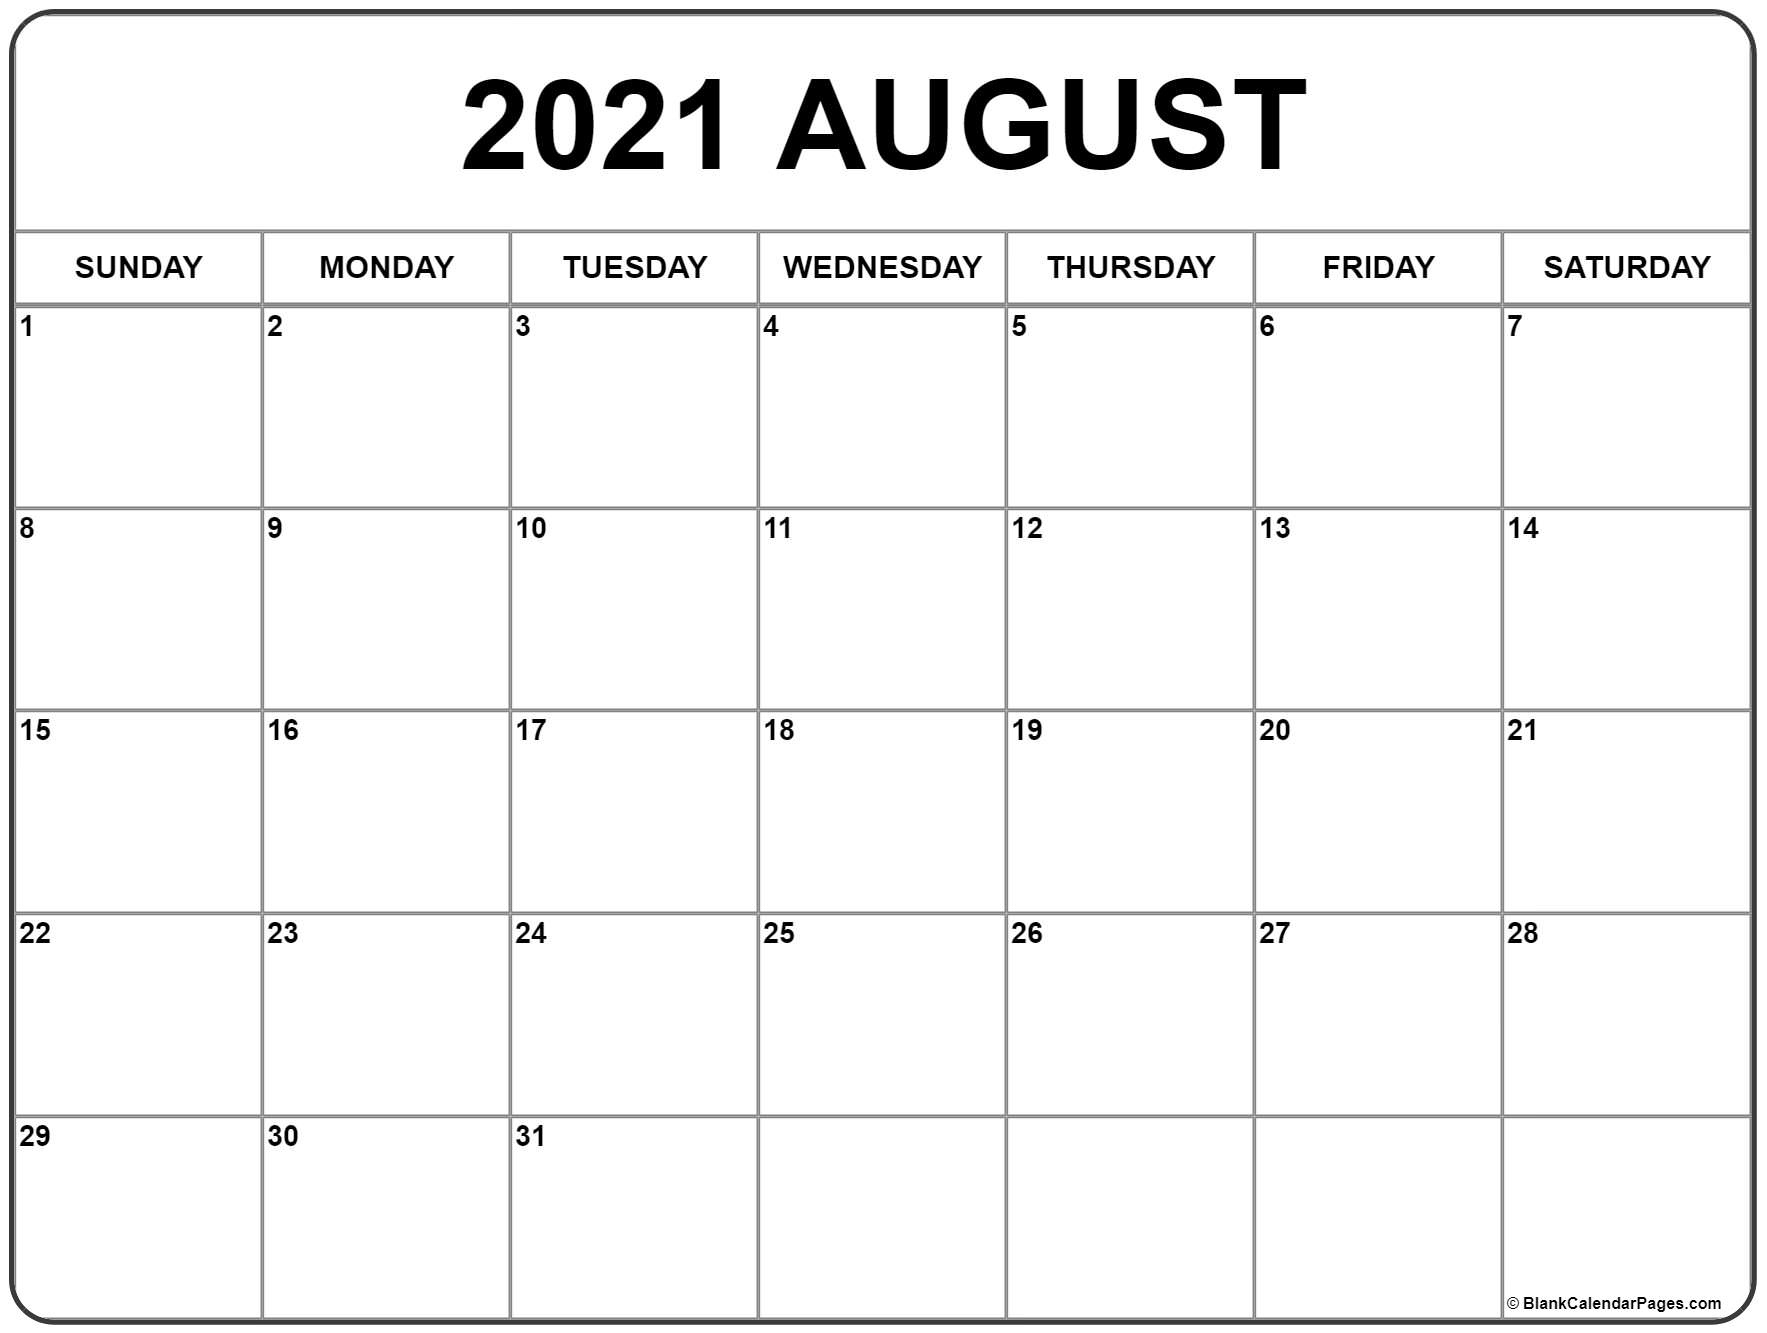 August 2021 Calendar | Free Printable Monthly Calendars August 2021 Calendar Print